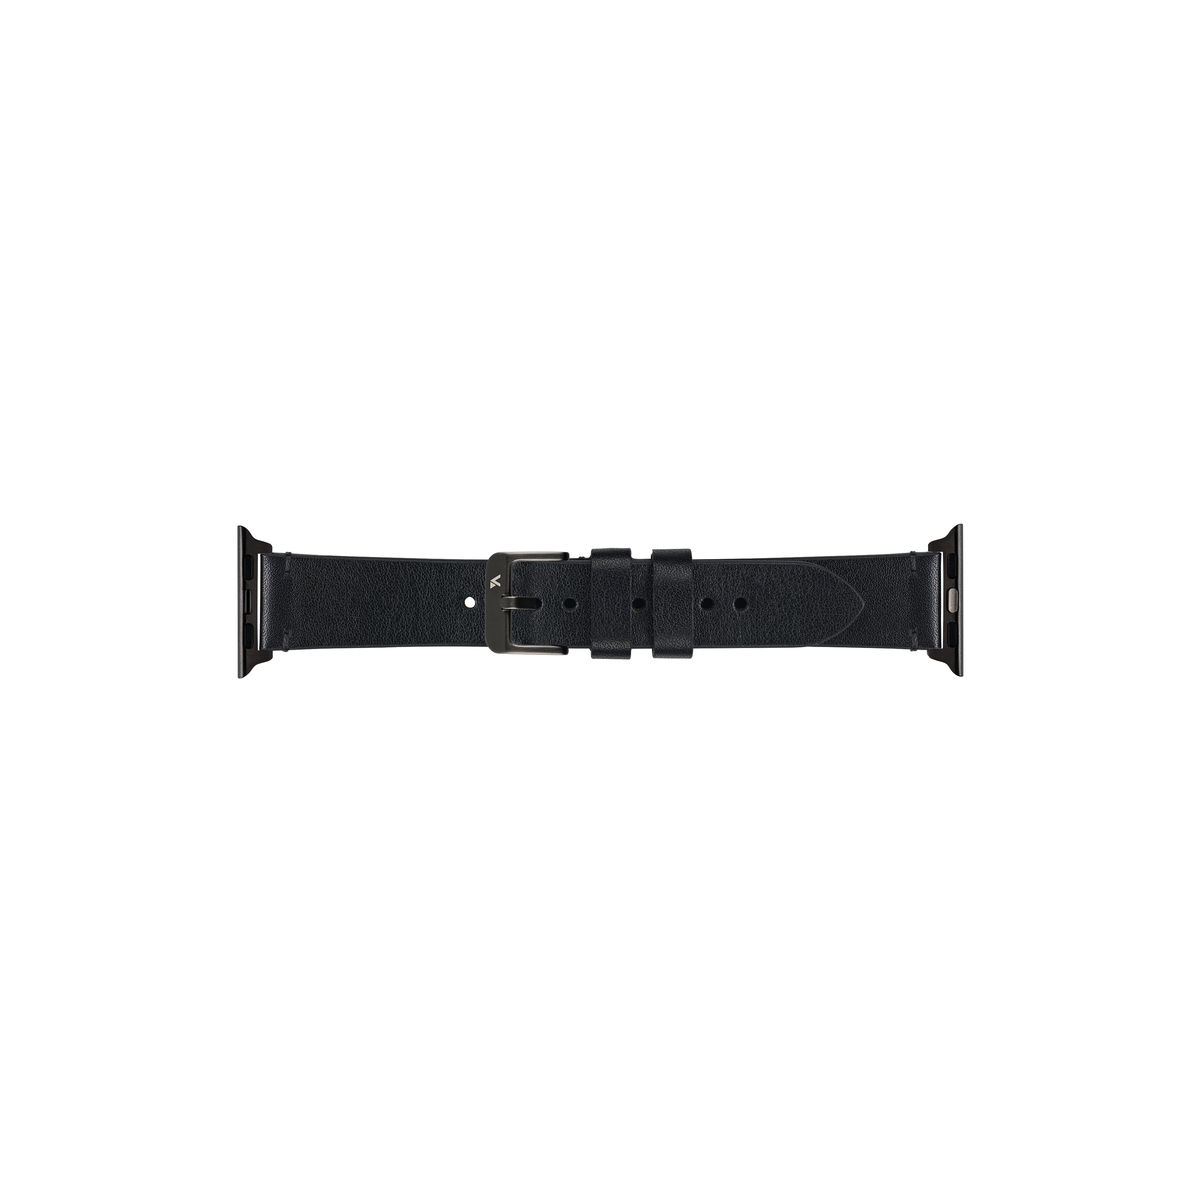 Watch ARTWIZZ Adapter, / 42mm, Größen WatchBand der / 45mm Apple, Apple 44mm Modelle Space-Grau Adapter,